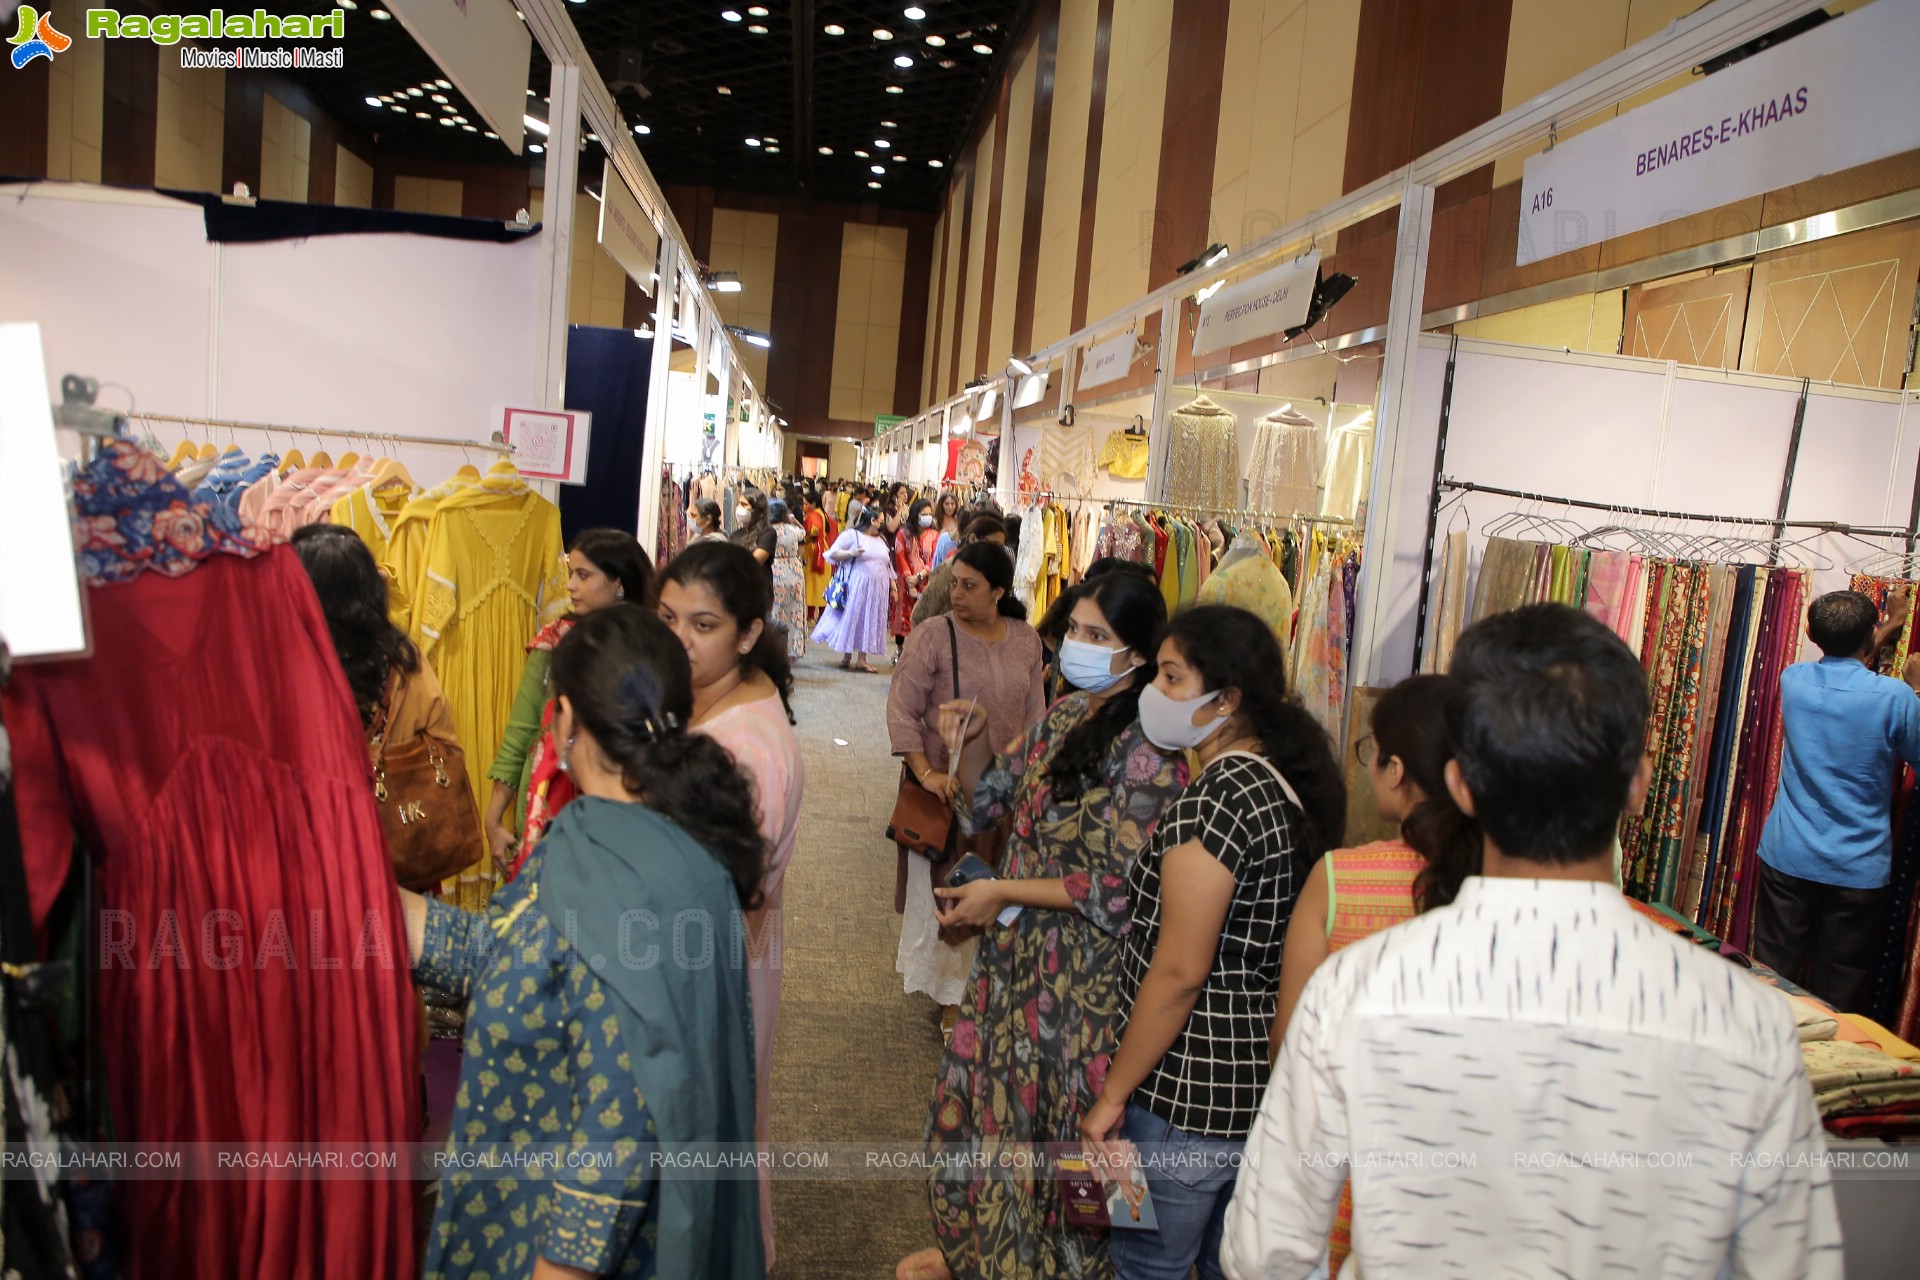 Hi Life Exhibition August 2022 Kicks Off at HICC-Novotel, Hyderabad